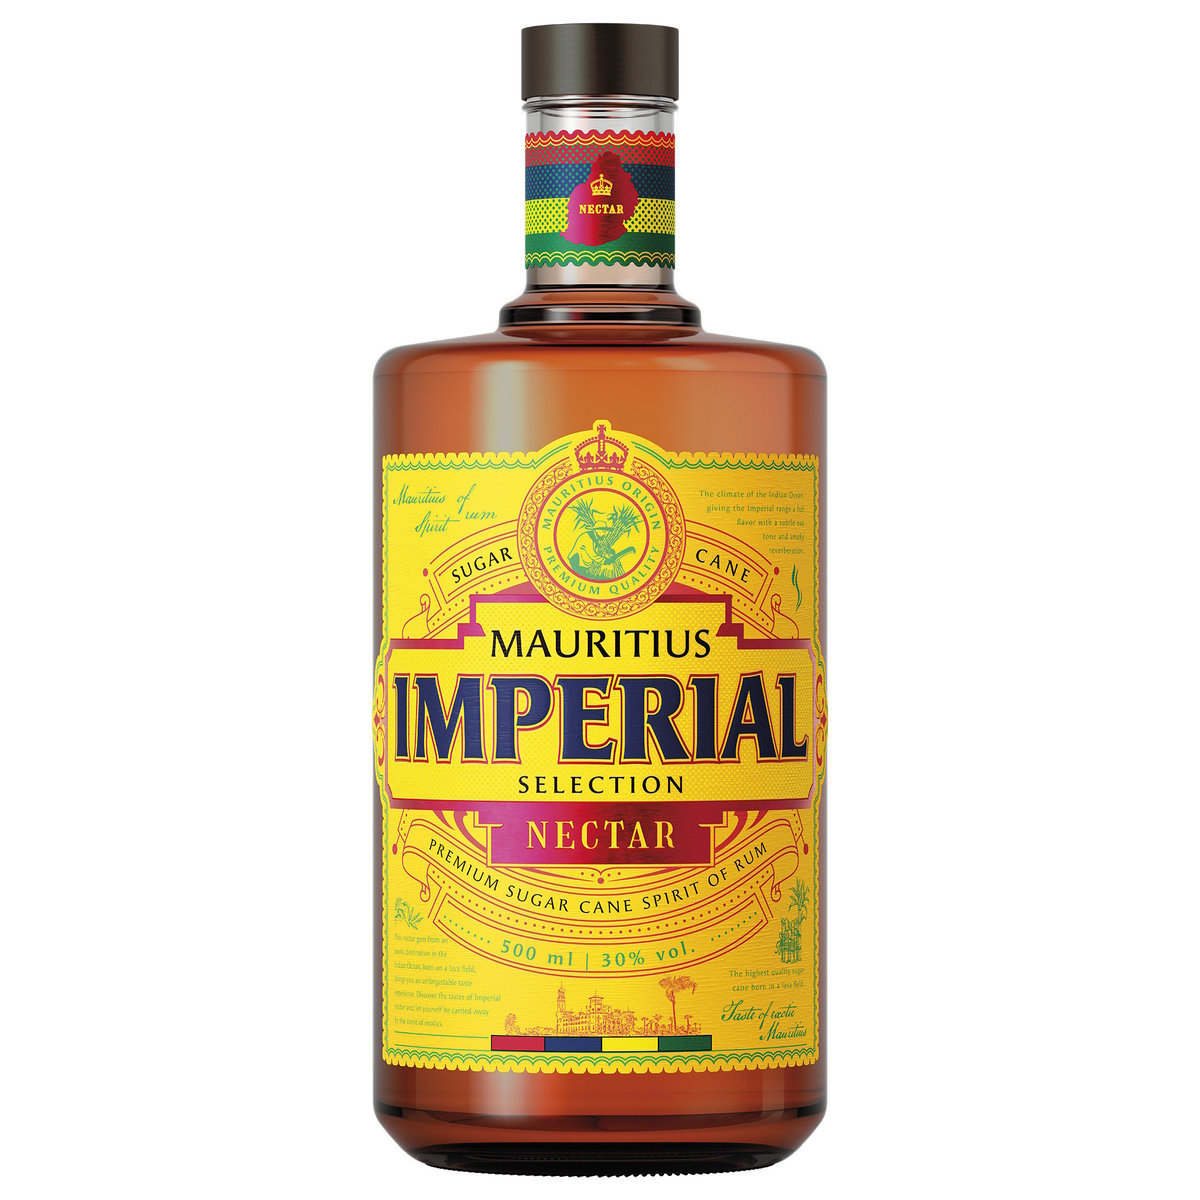 Mauritius Imperial Selection nectar rum 30%